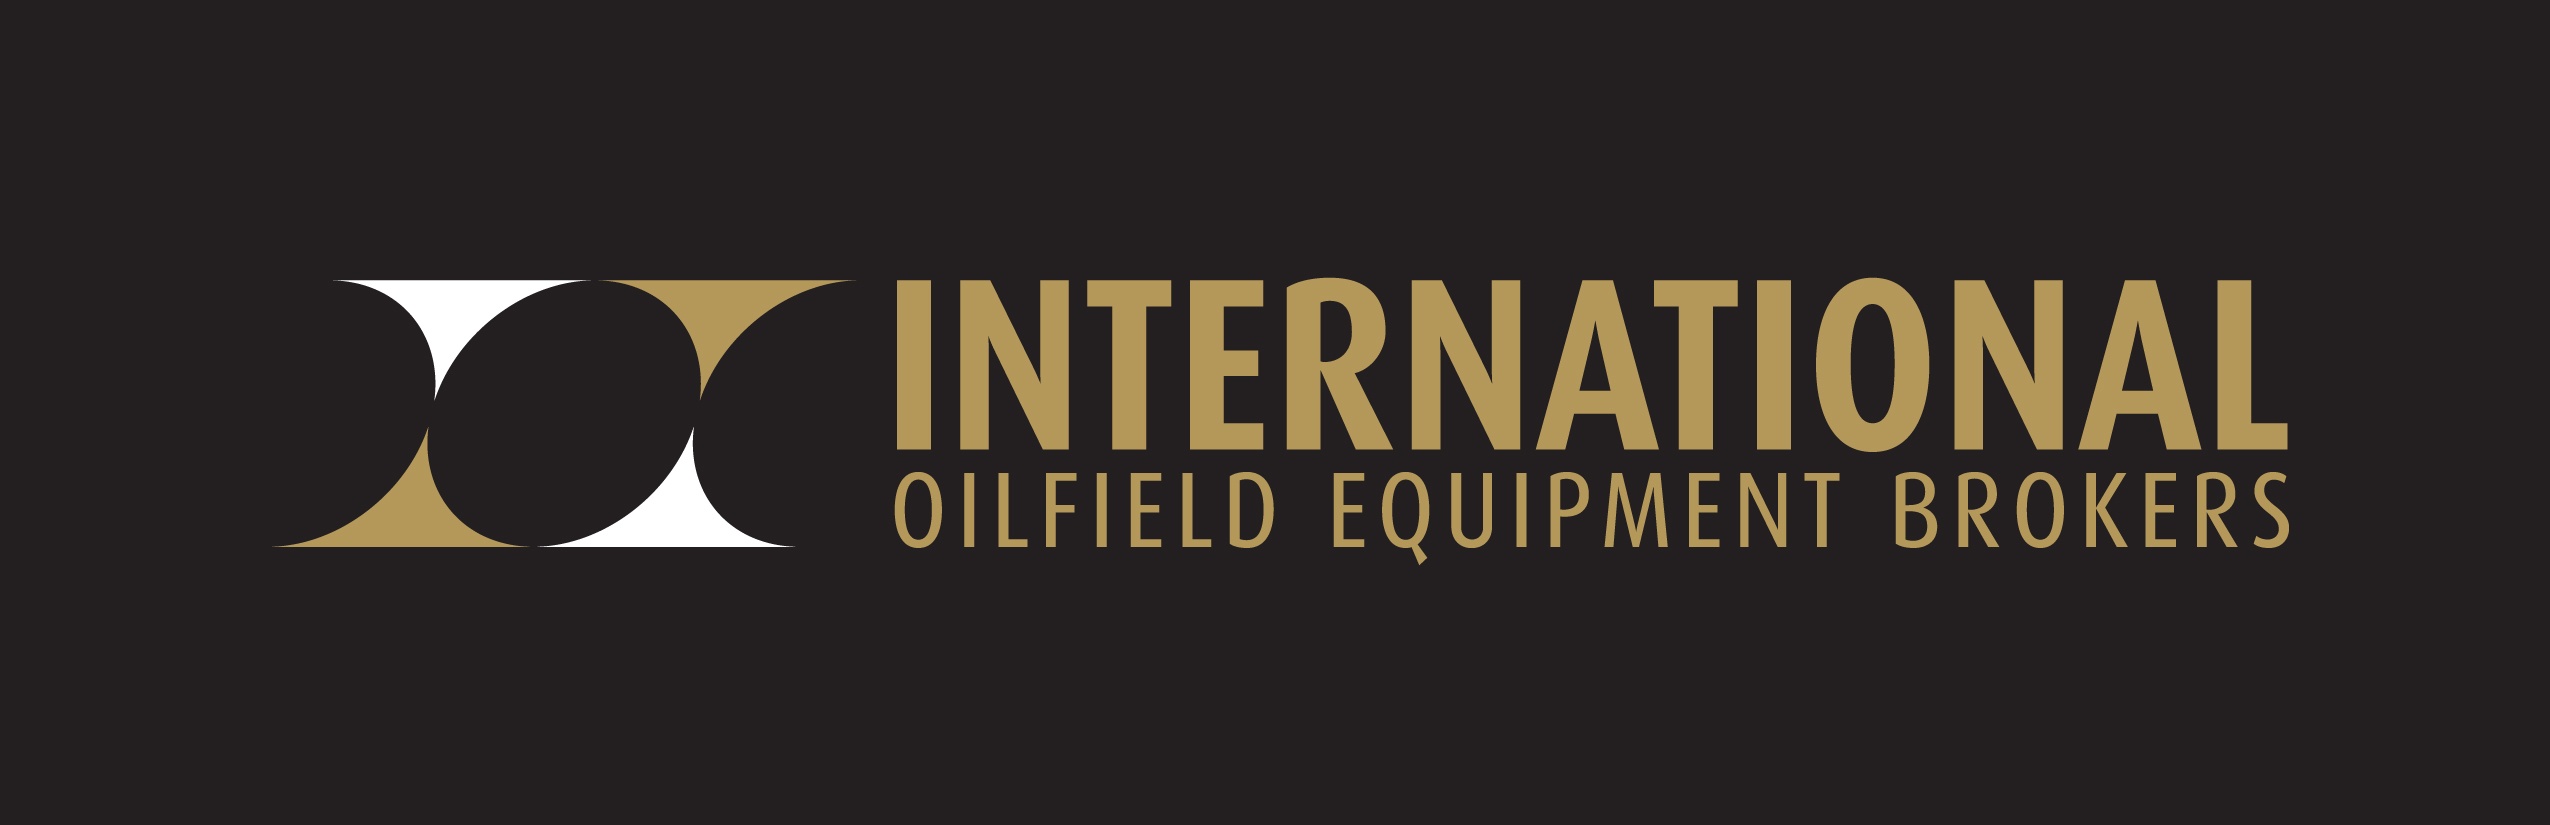 International Oilfield Equipment Brokers (IOEB)